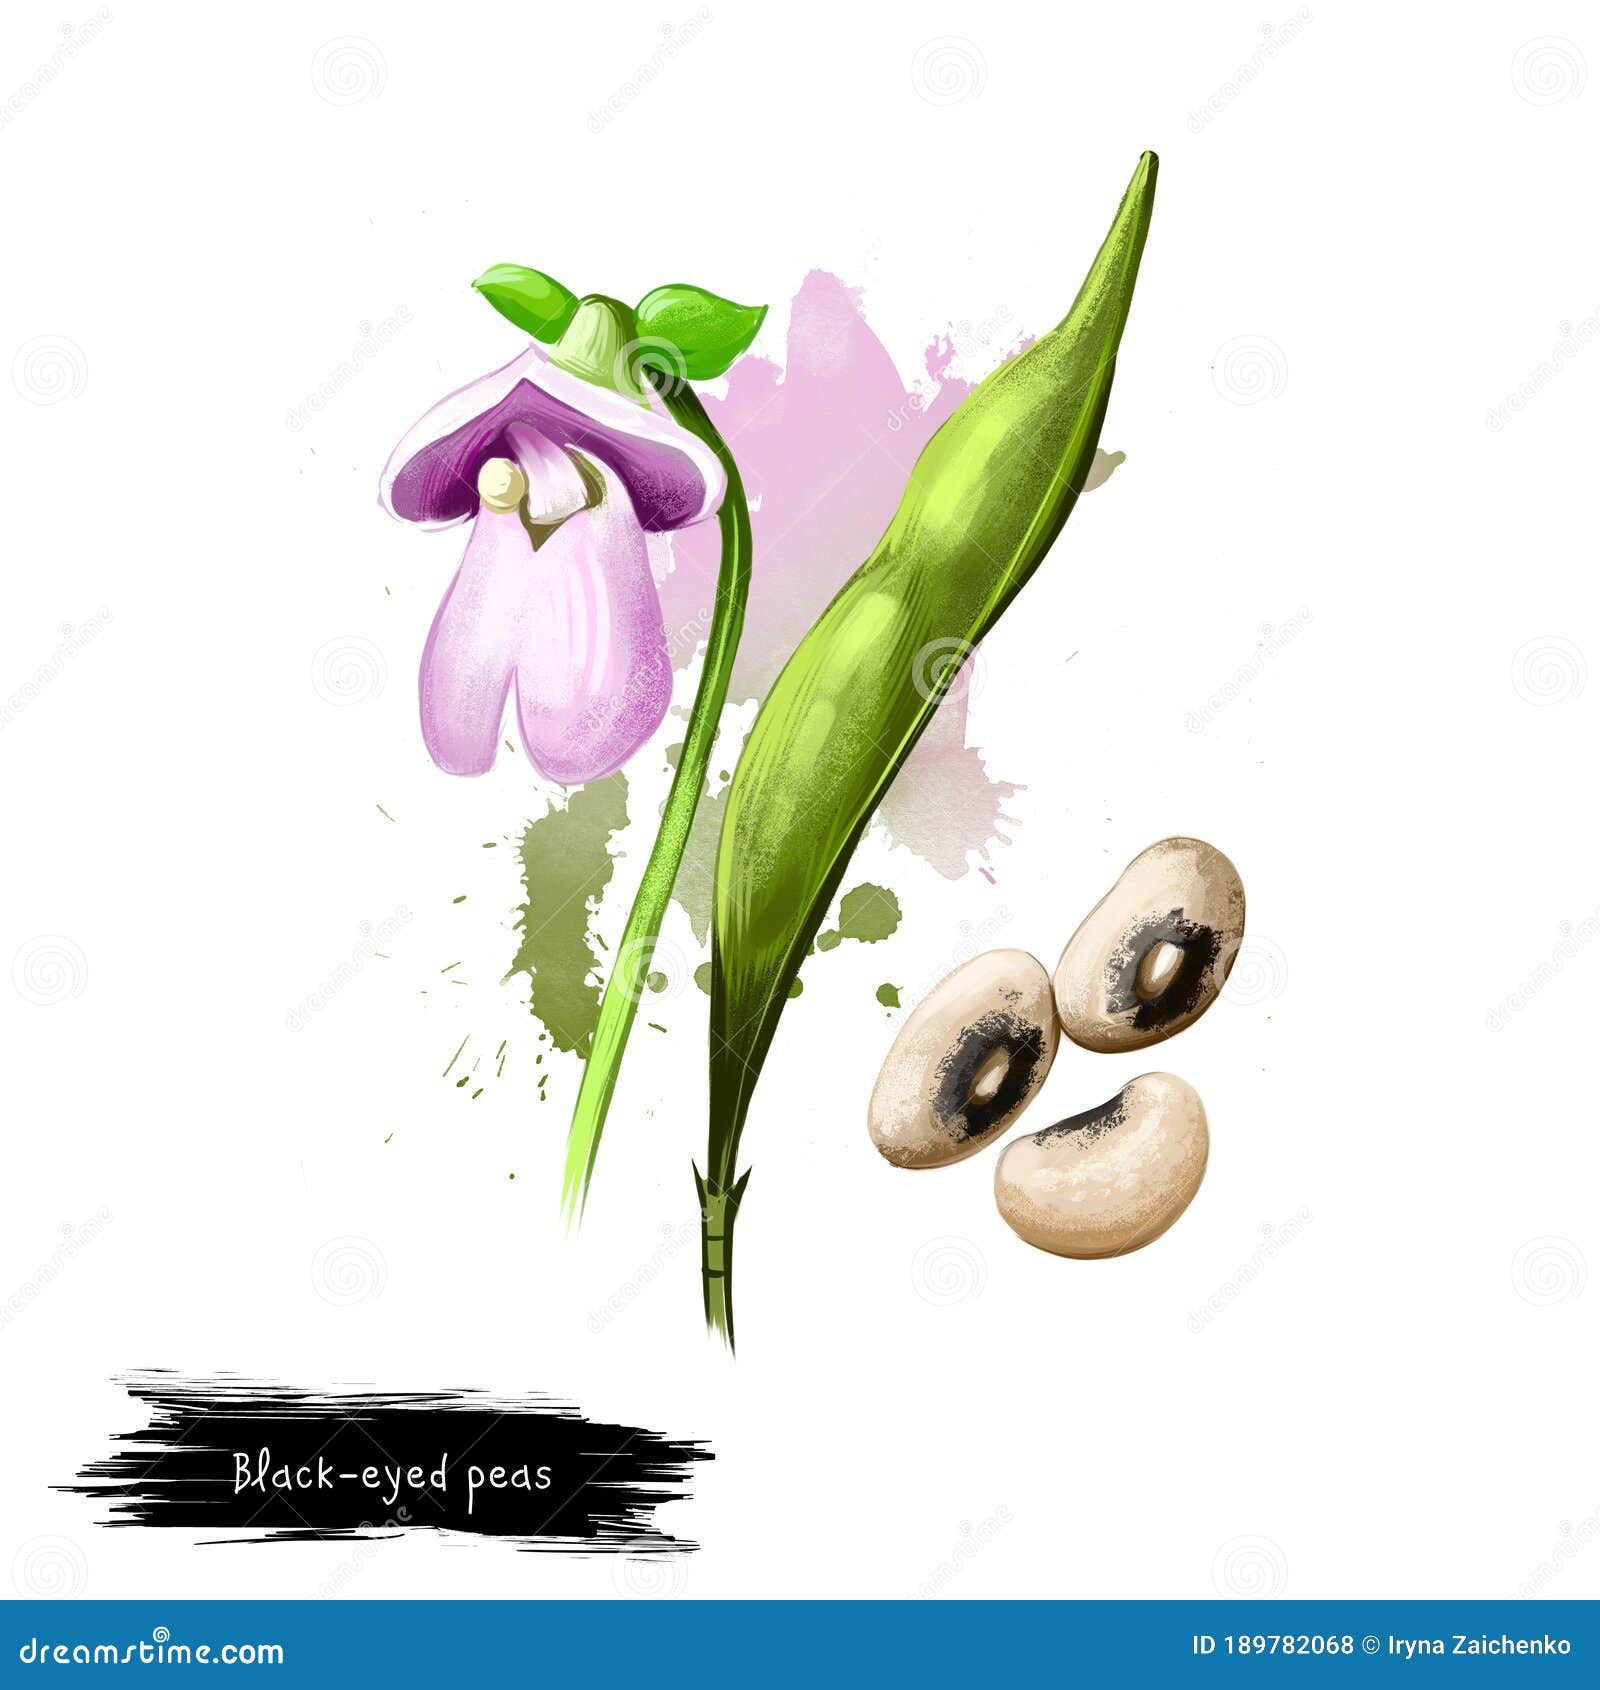 Share 83+ pea plant drawing best - xkldase.edu.vn